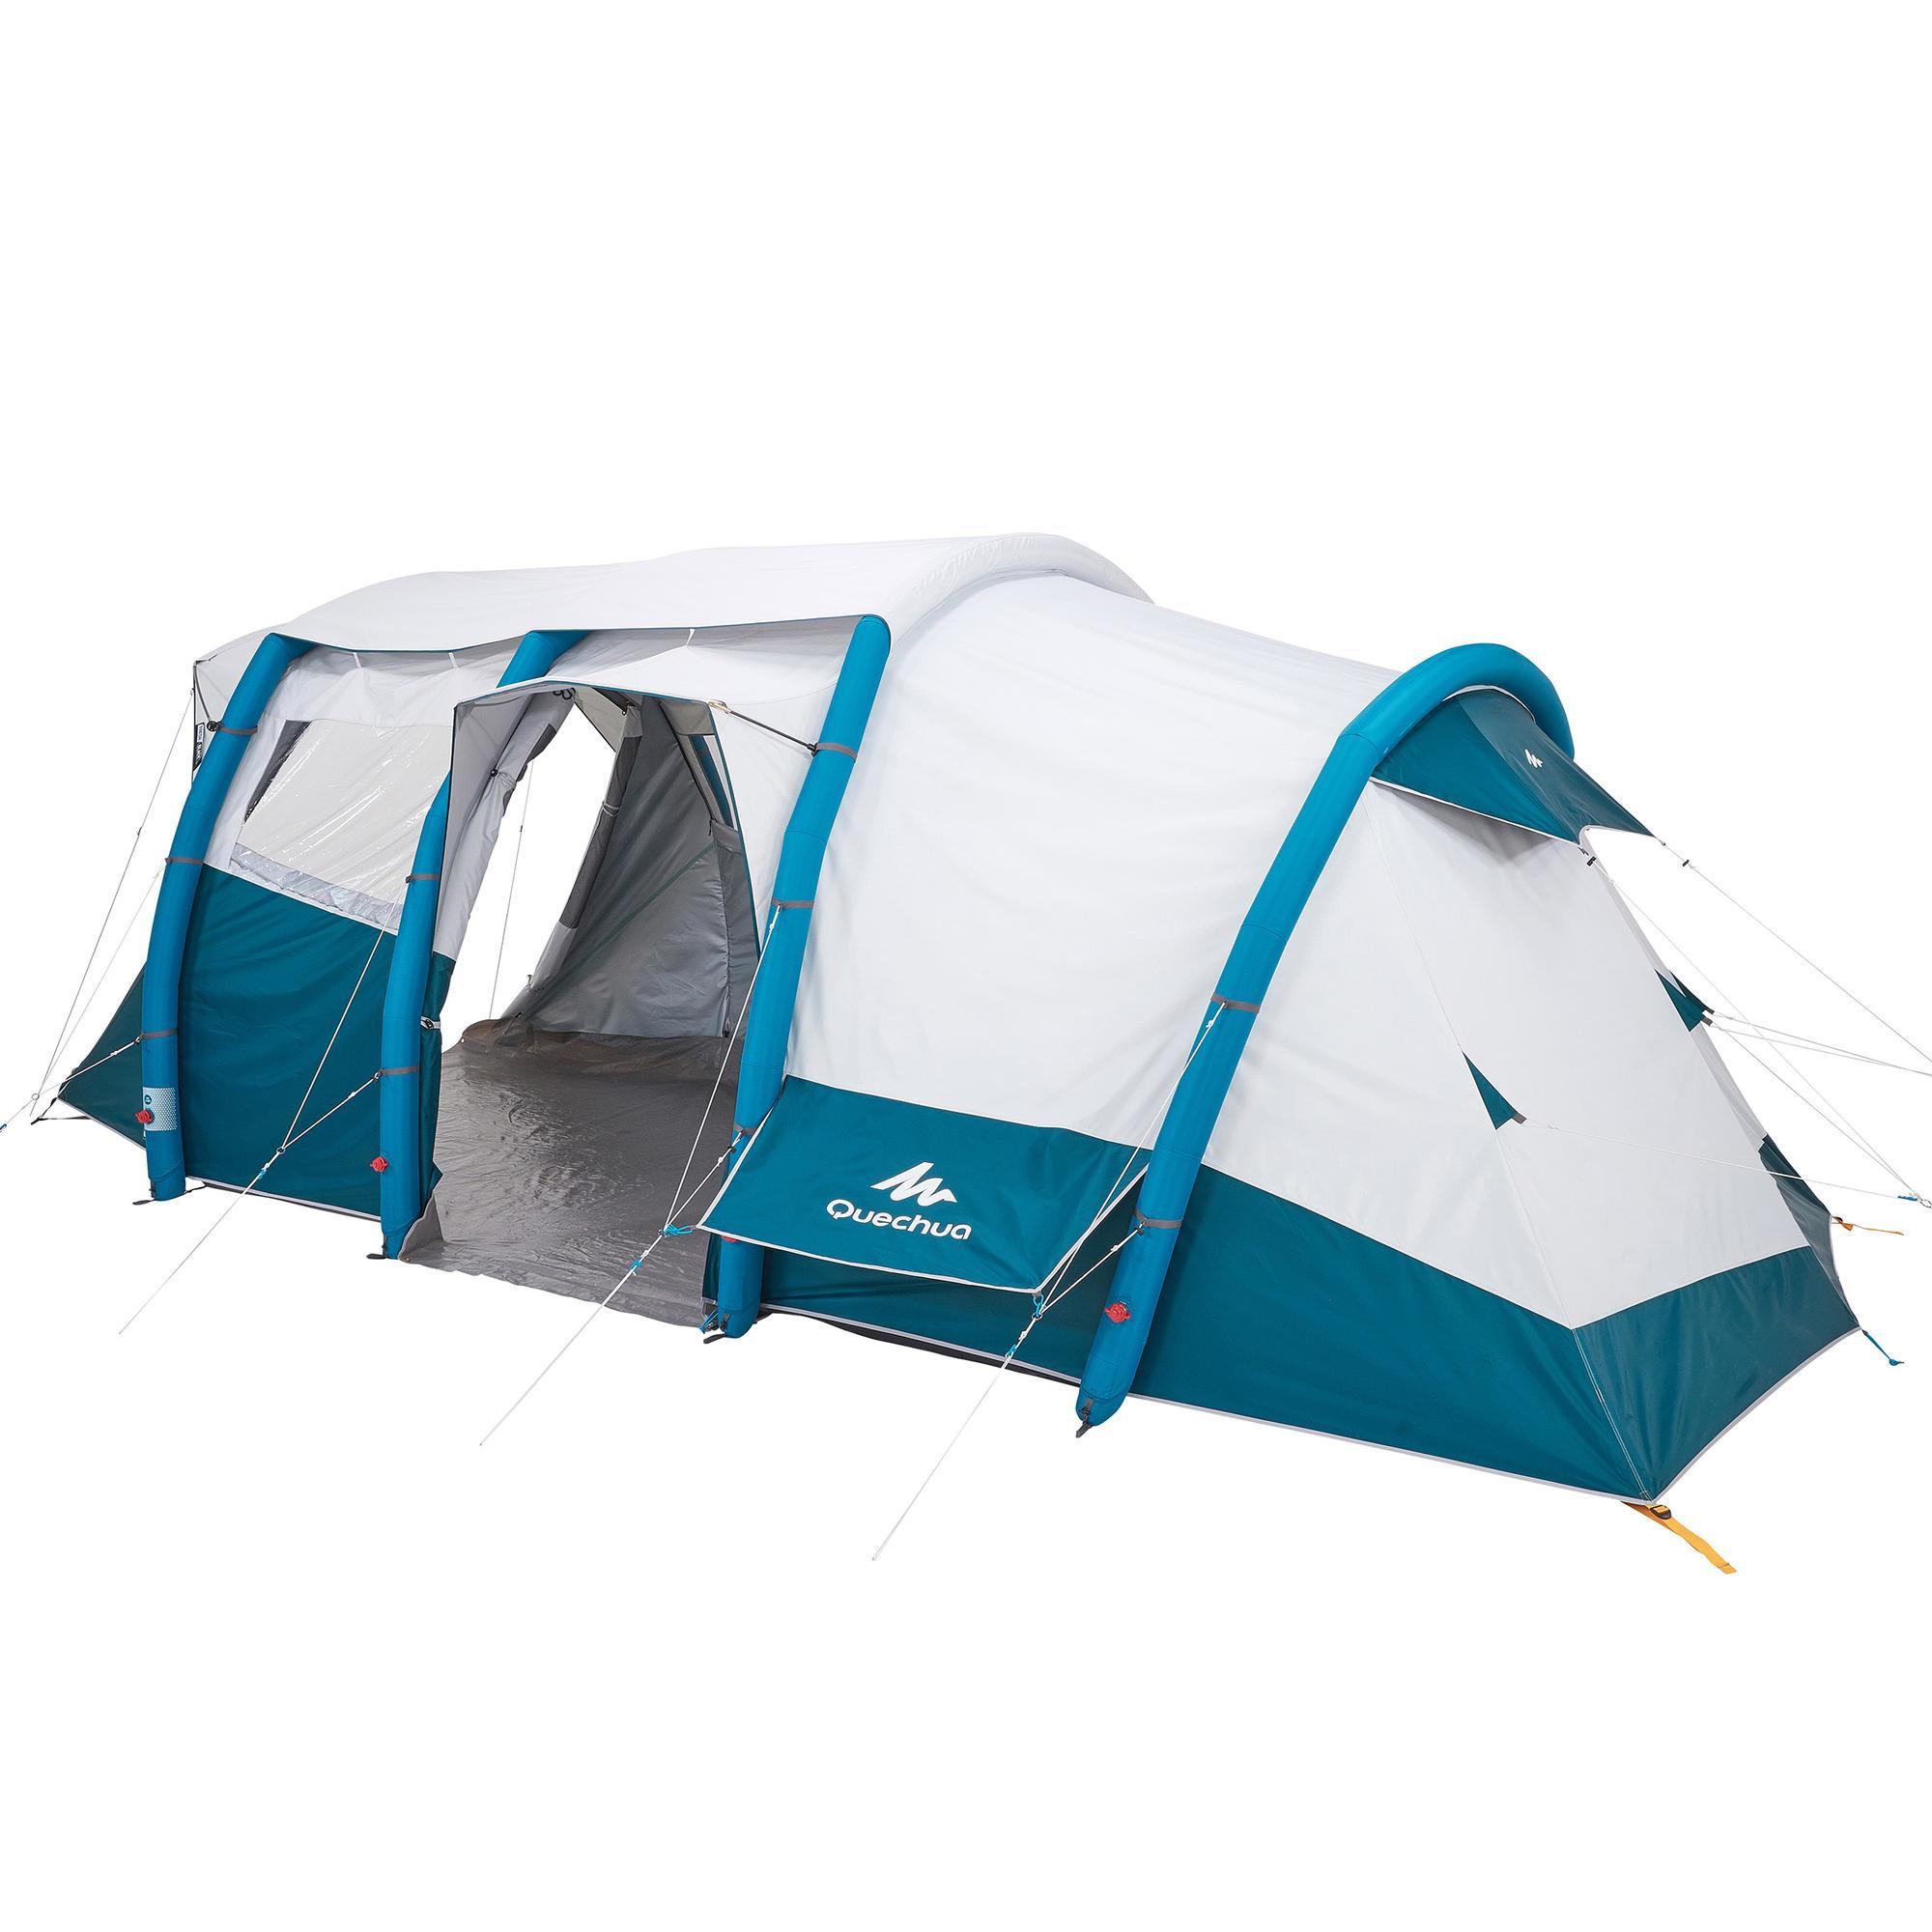 decathlon 6 man tent